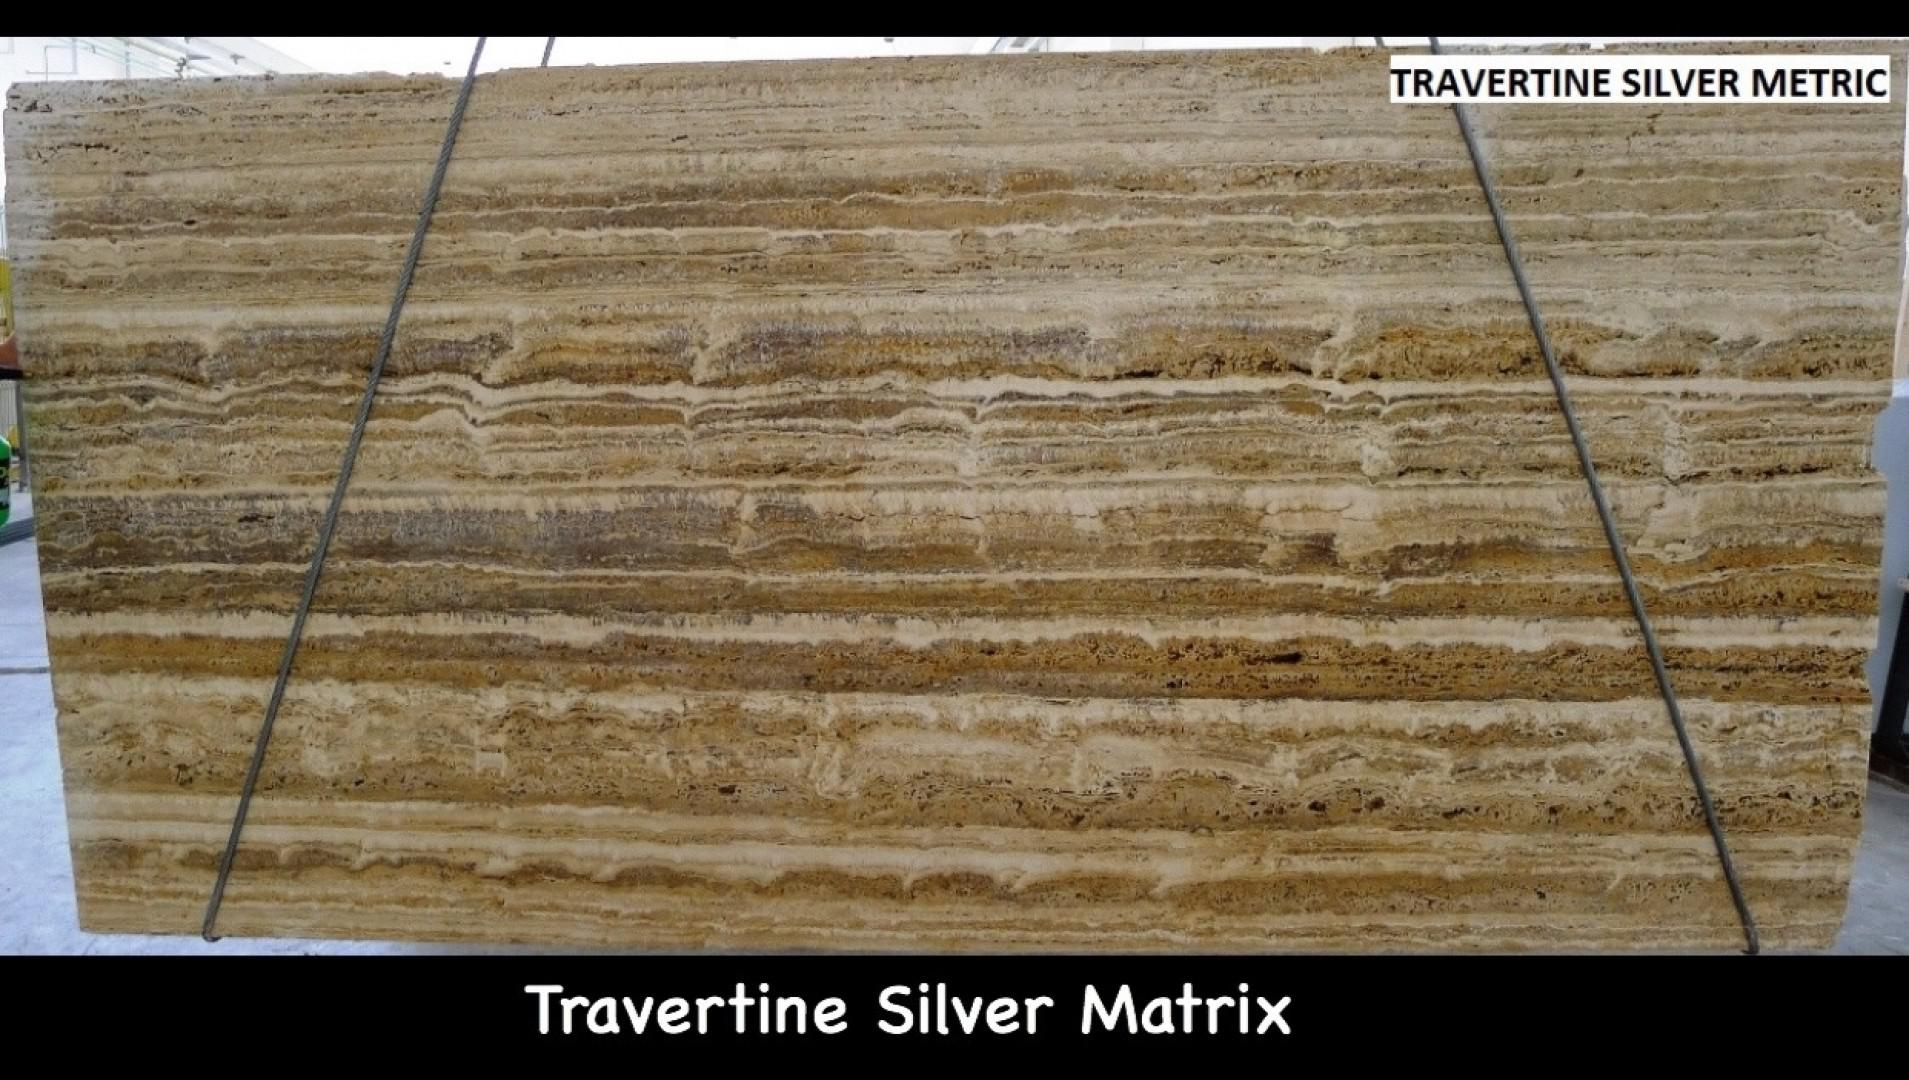 Travertine Silver Matrix from JSP